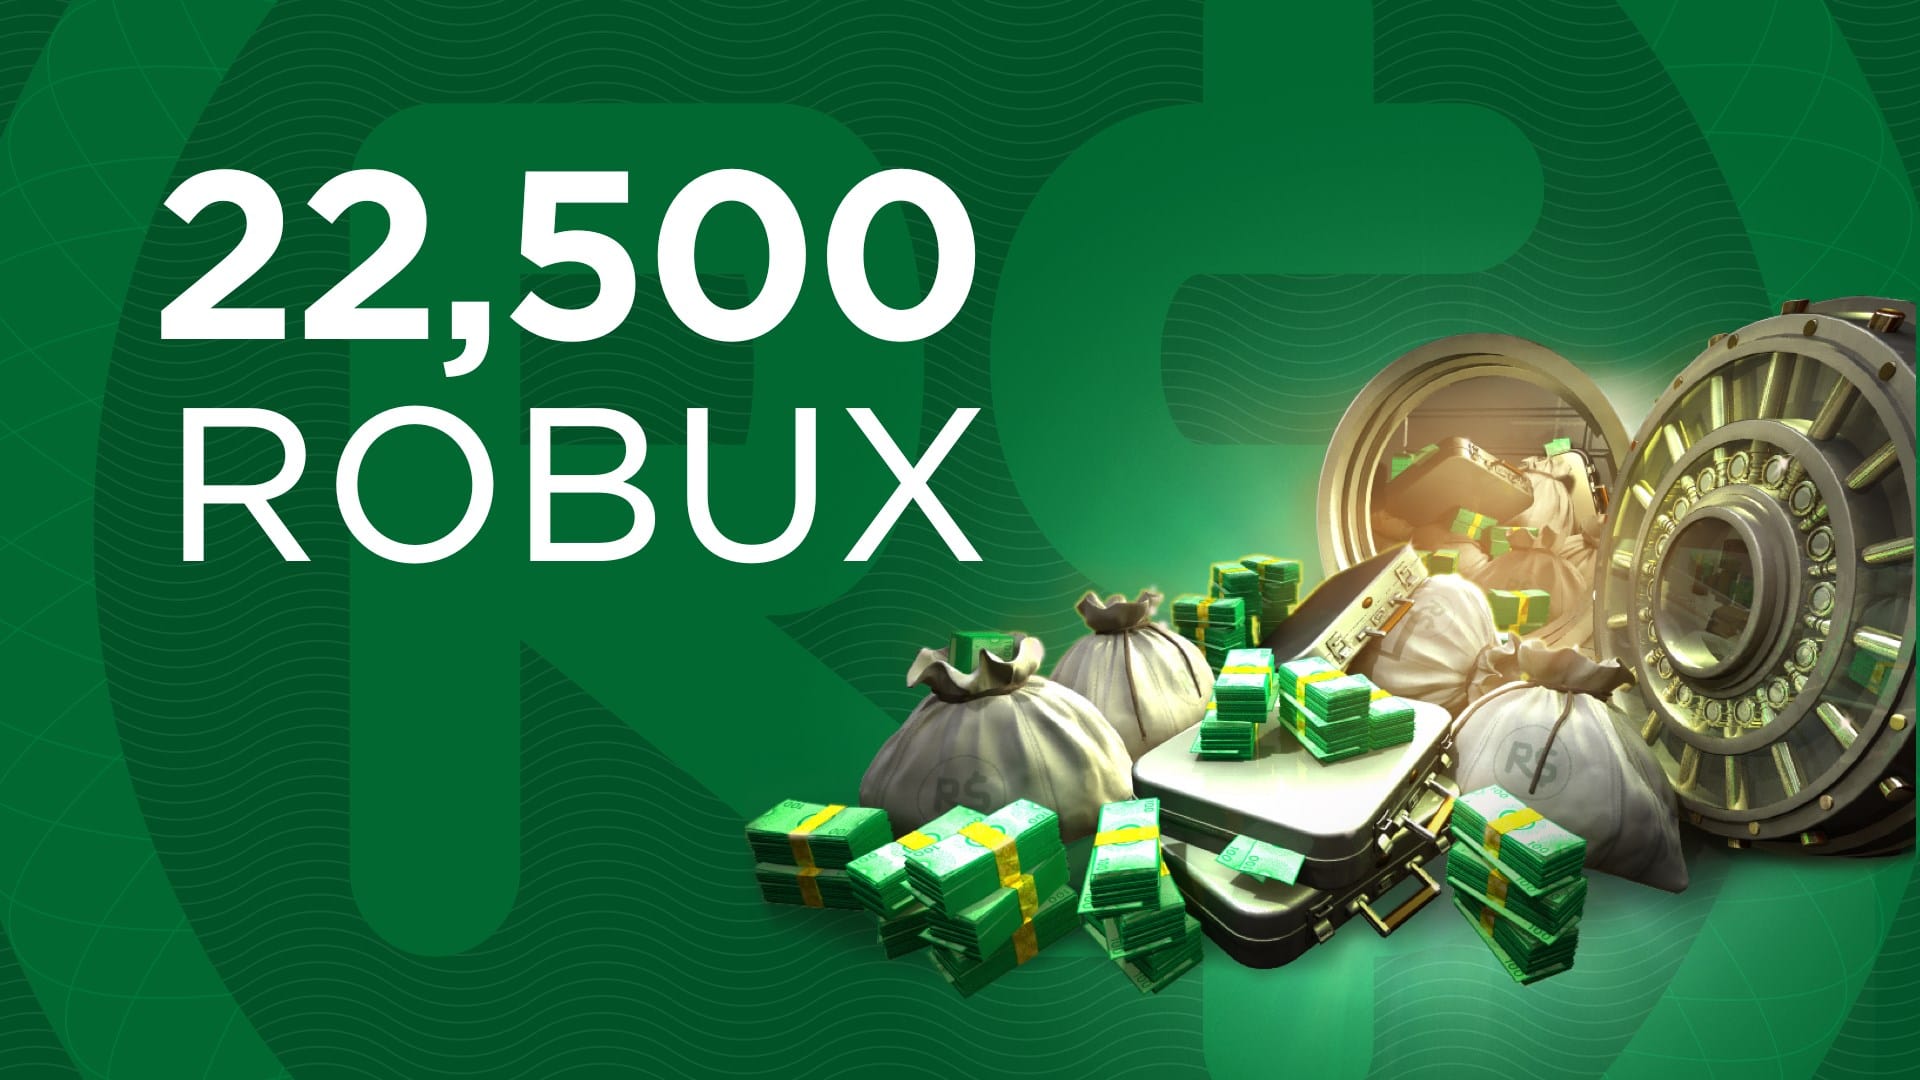 robux roblox xbox generator buy microsoft earn codes hack store legit ways techolac purchase password change gratis websites games visit